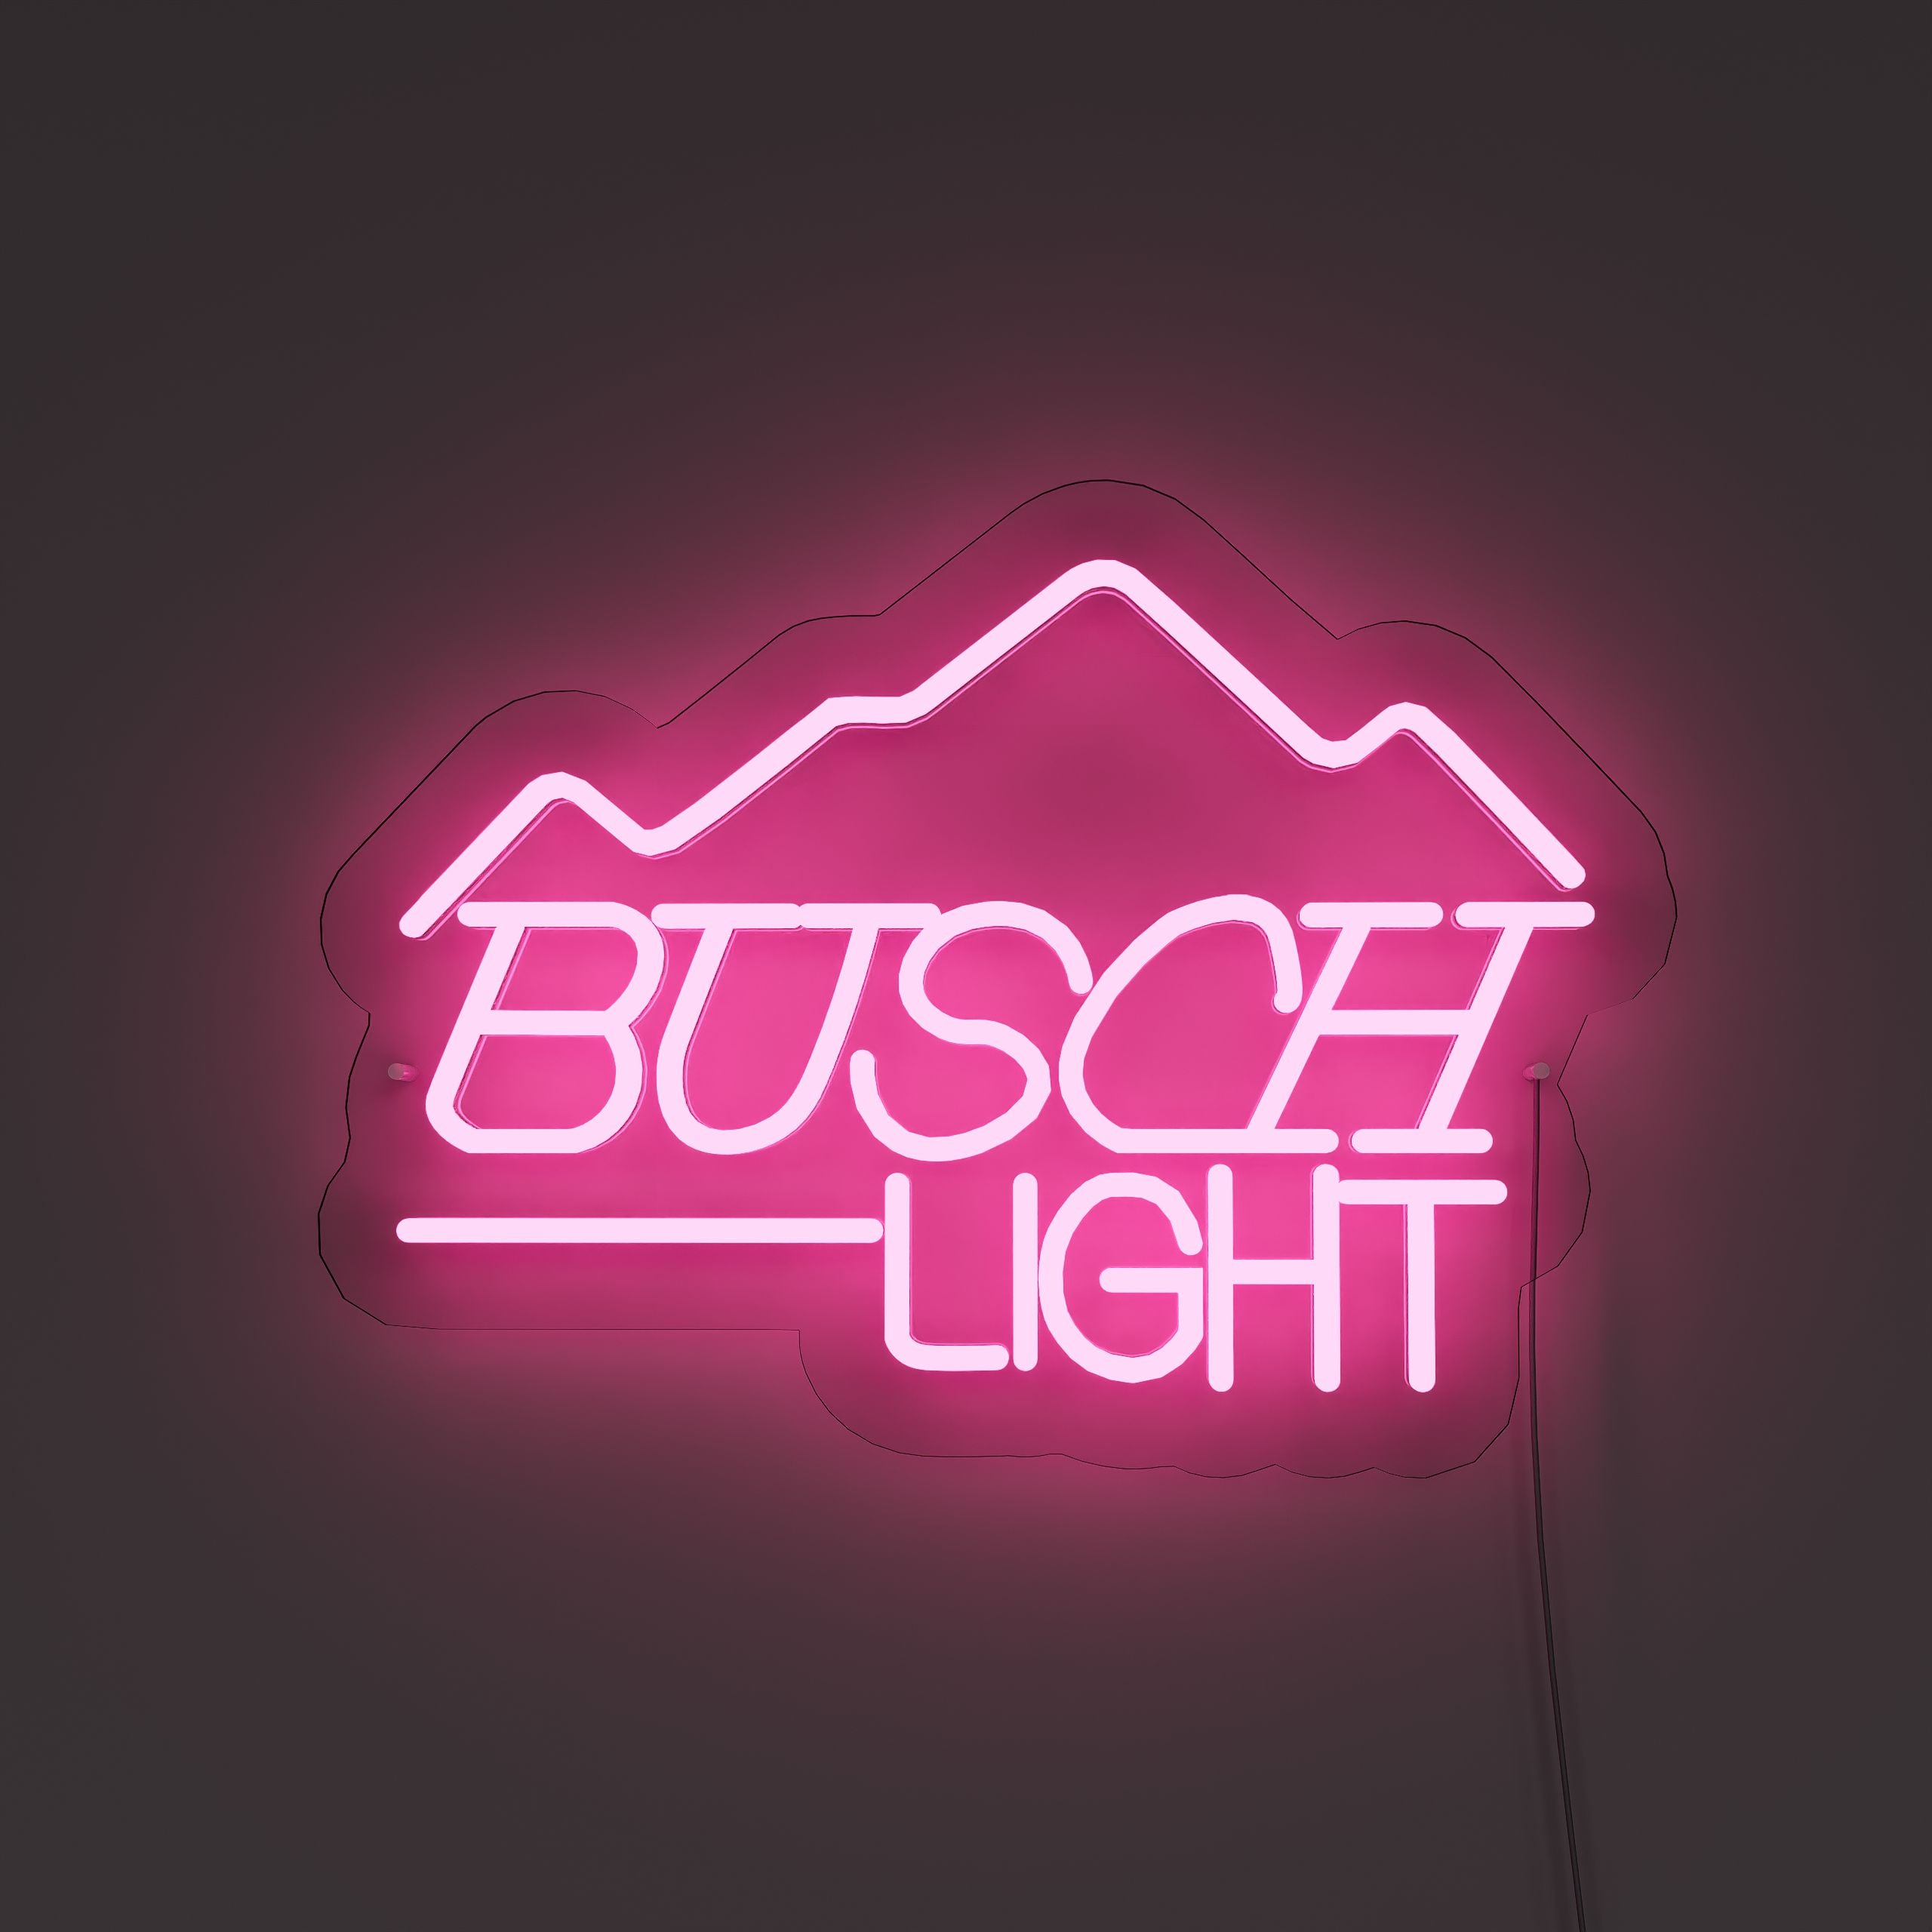 fbusch-light-neon-signs-DeepPink-Neon-sign-Lite